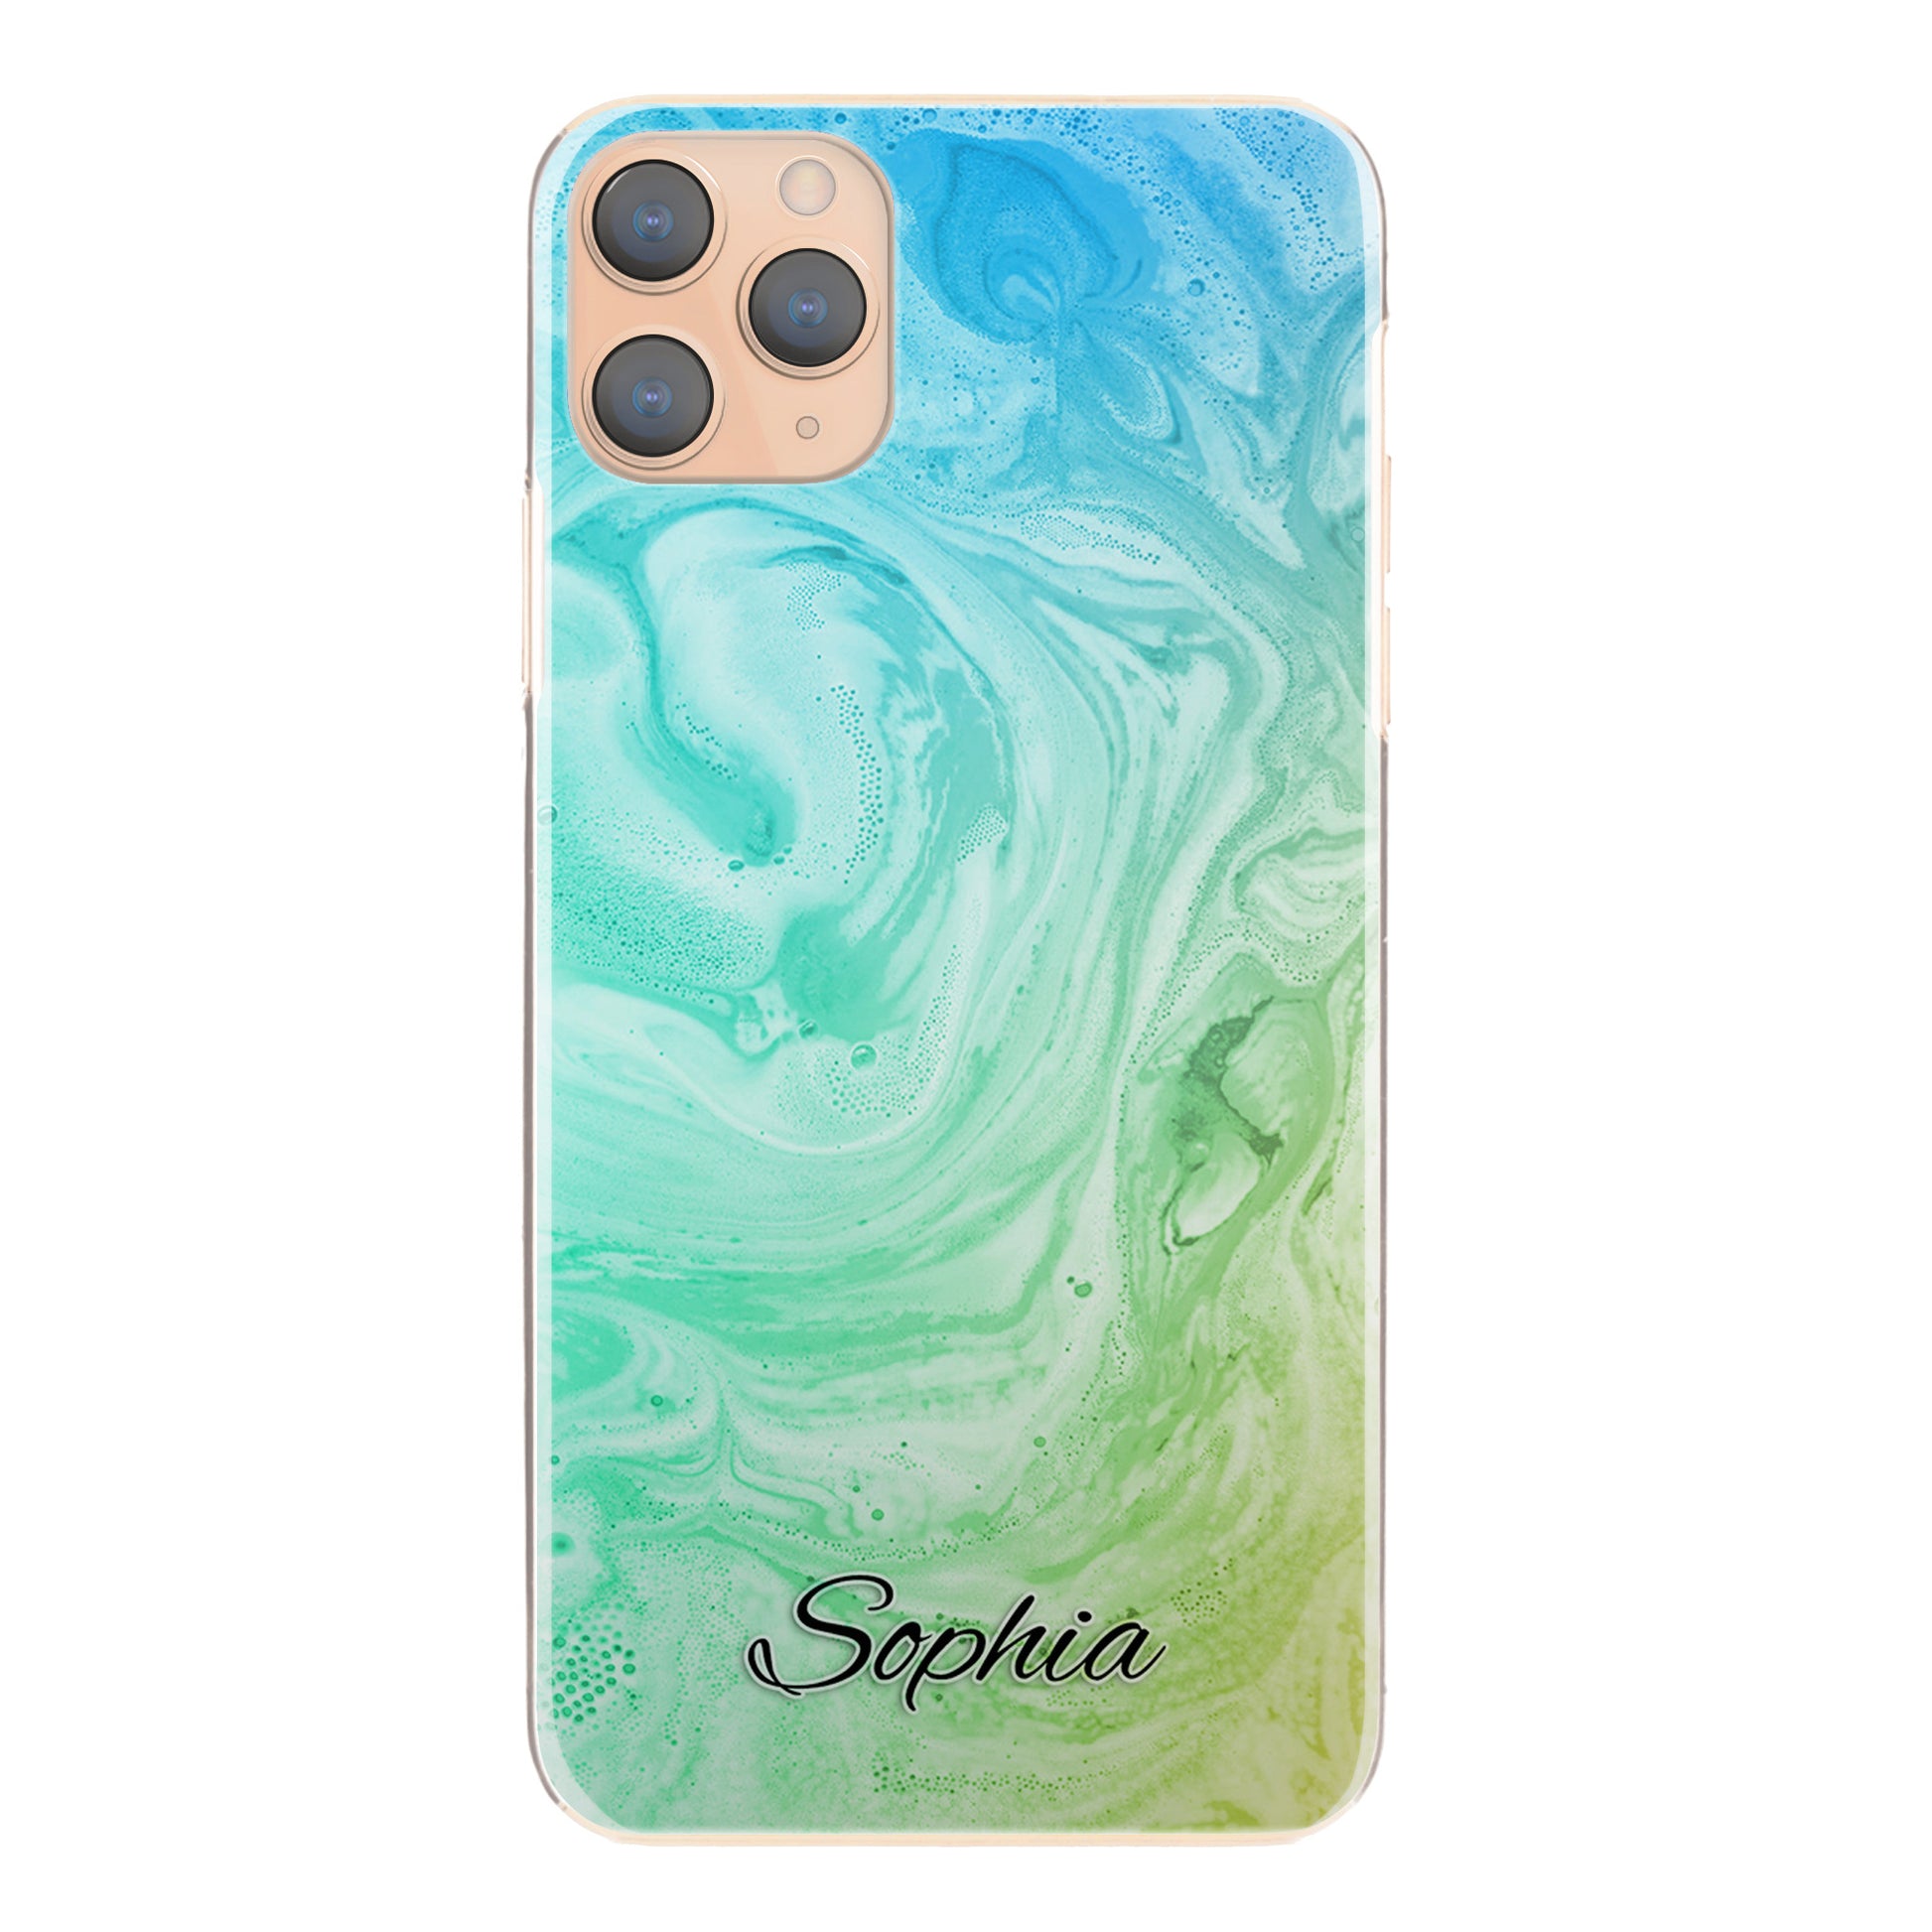 Personalised Motorola Phone Hard Case with Stylish Text on Turquoise Gradient Swirled Marble